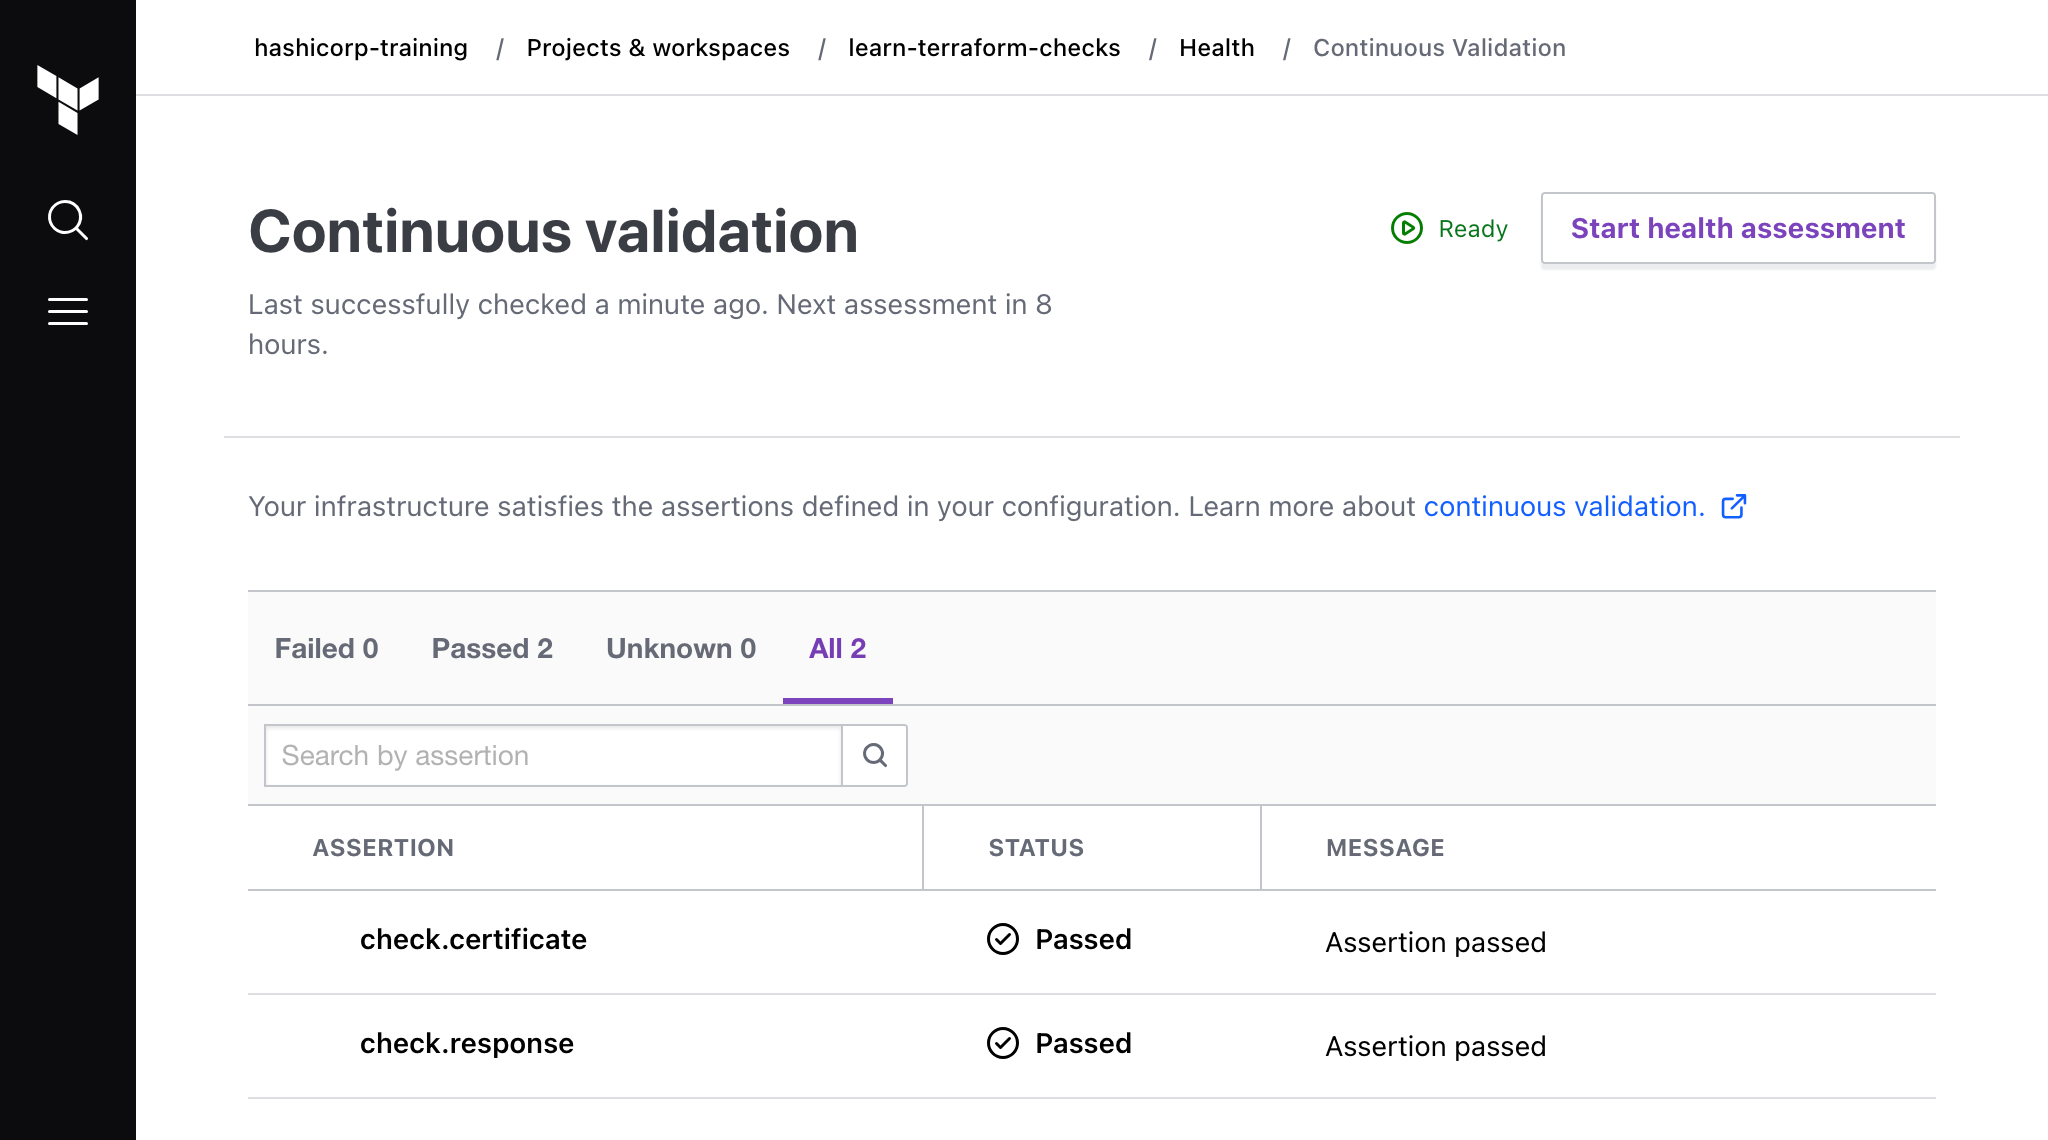 Continuous validation checks pass